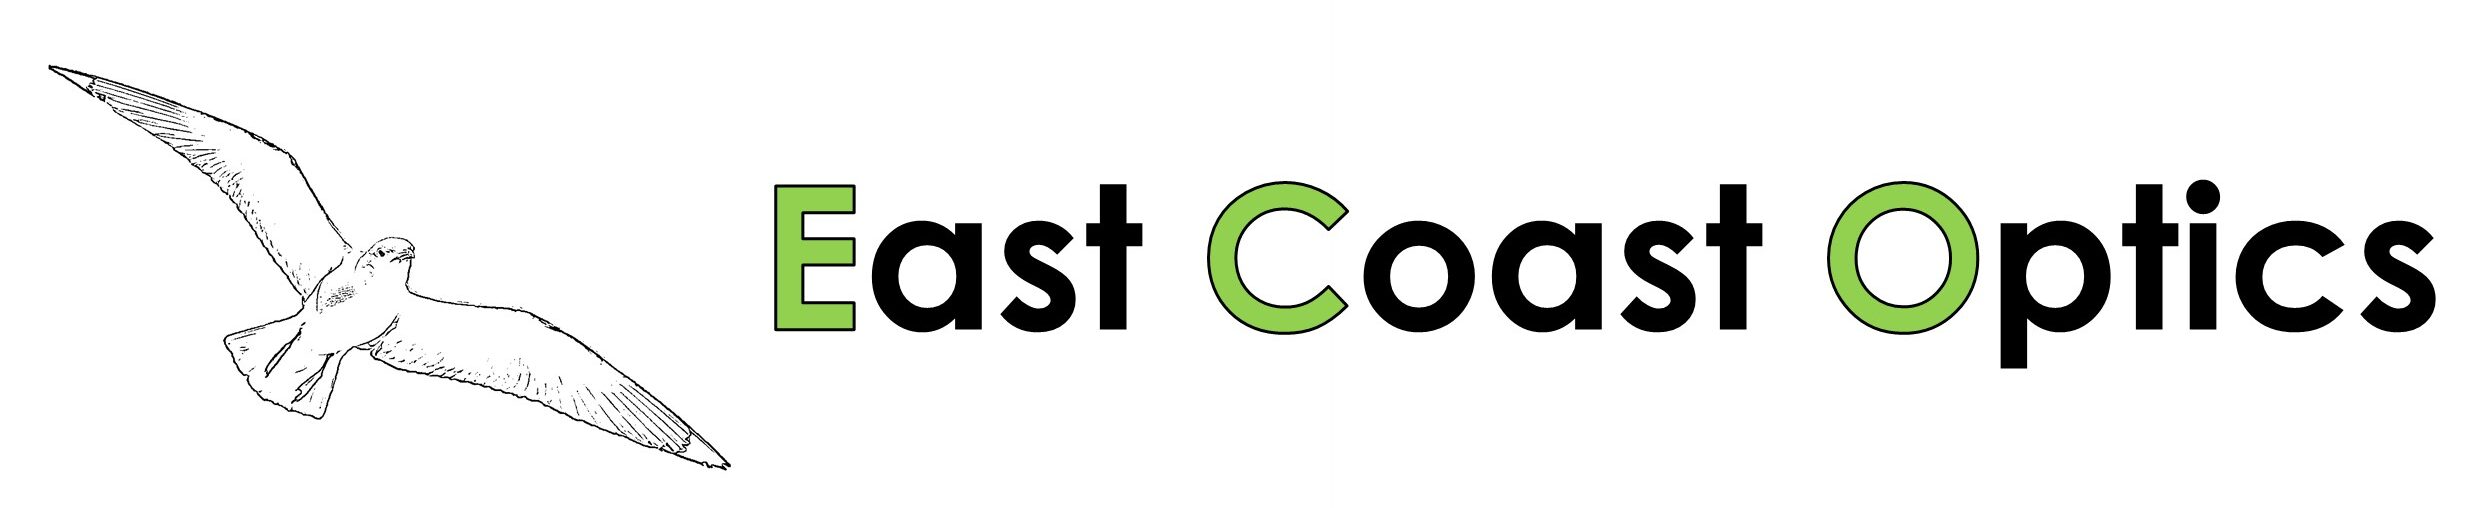 East Coast Optics Logo